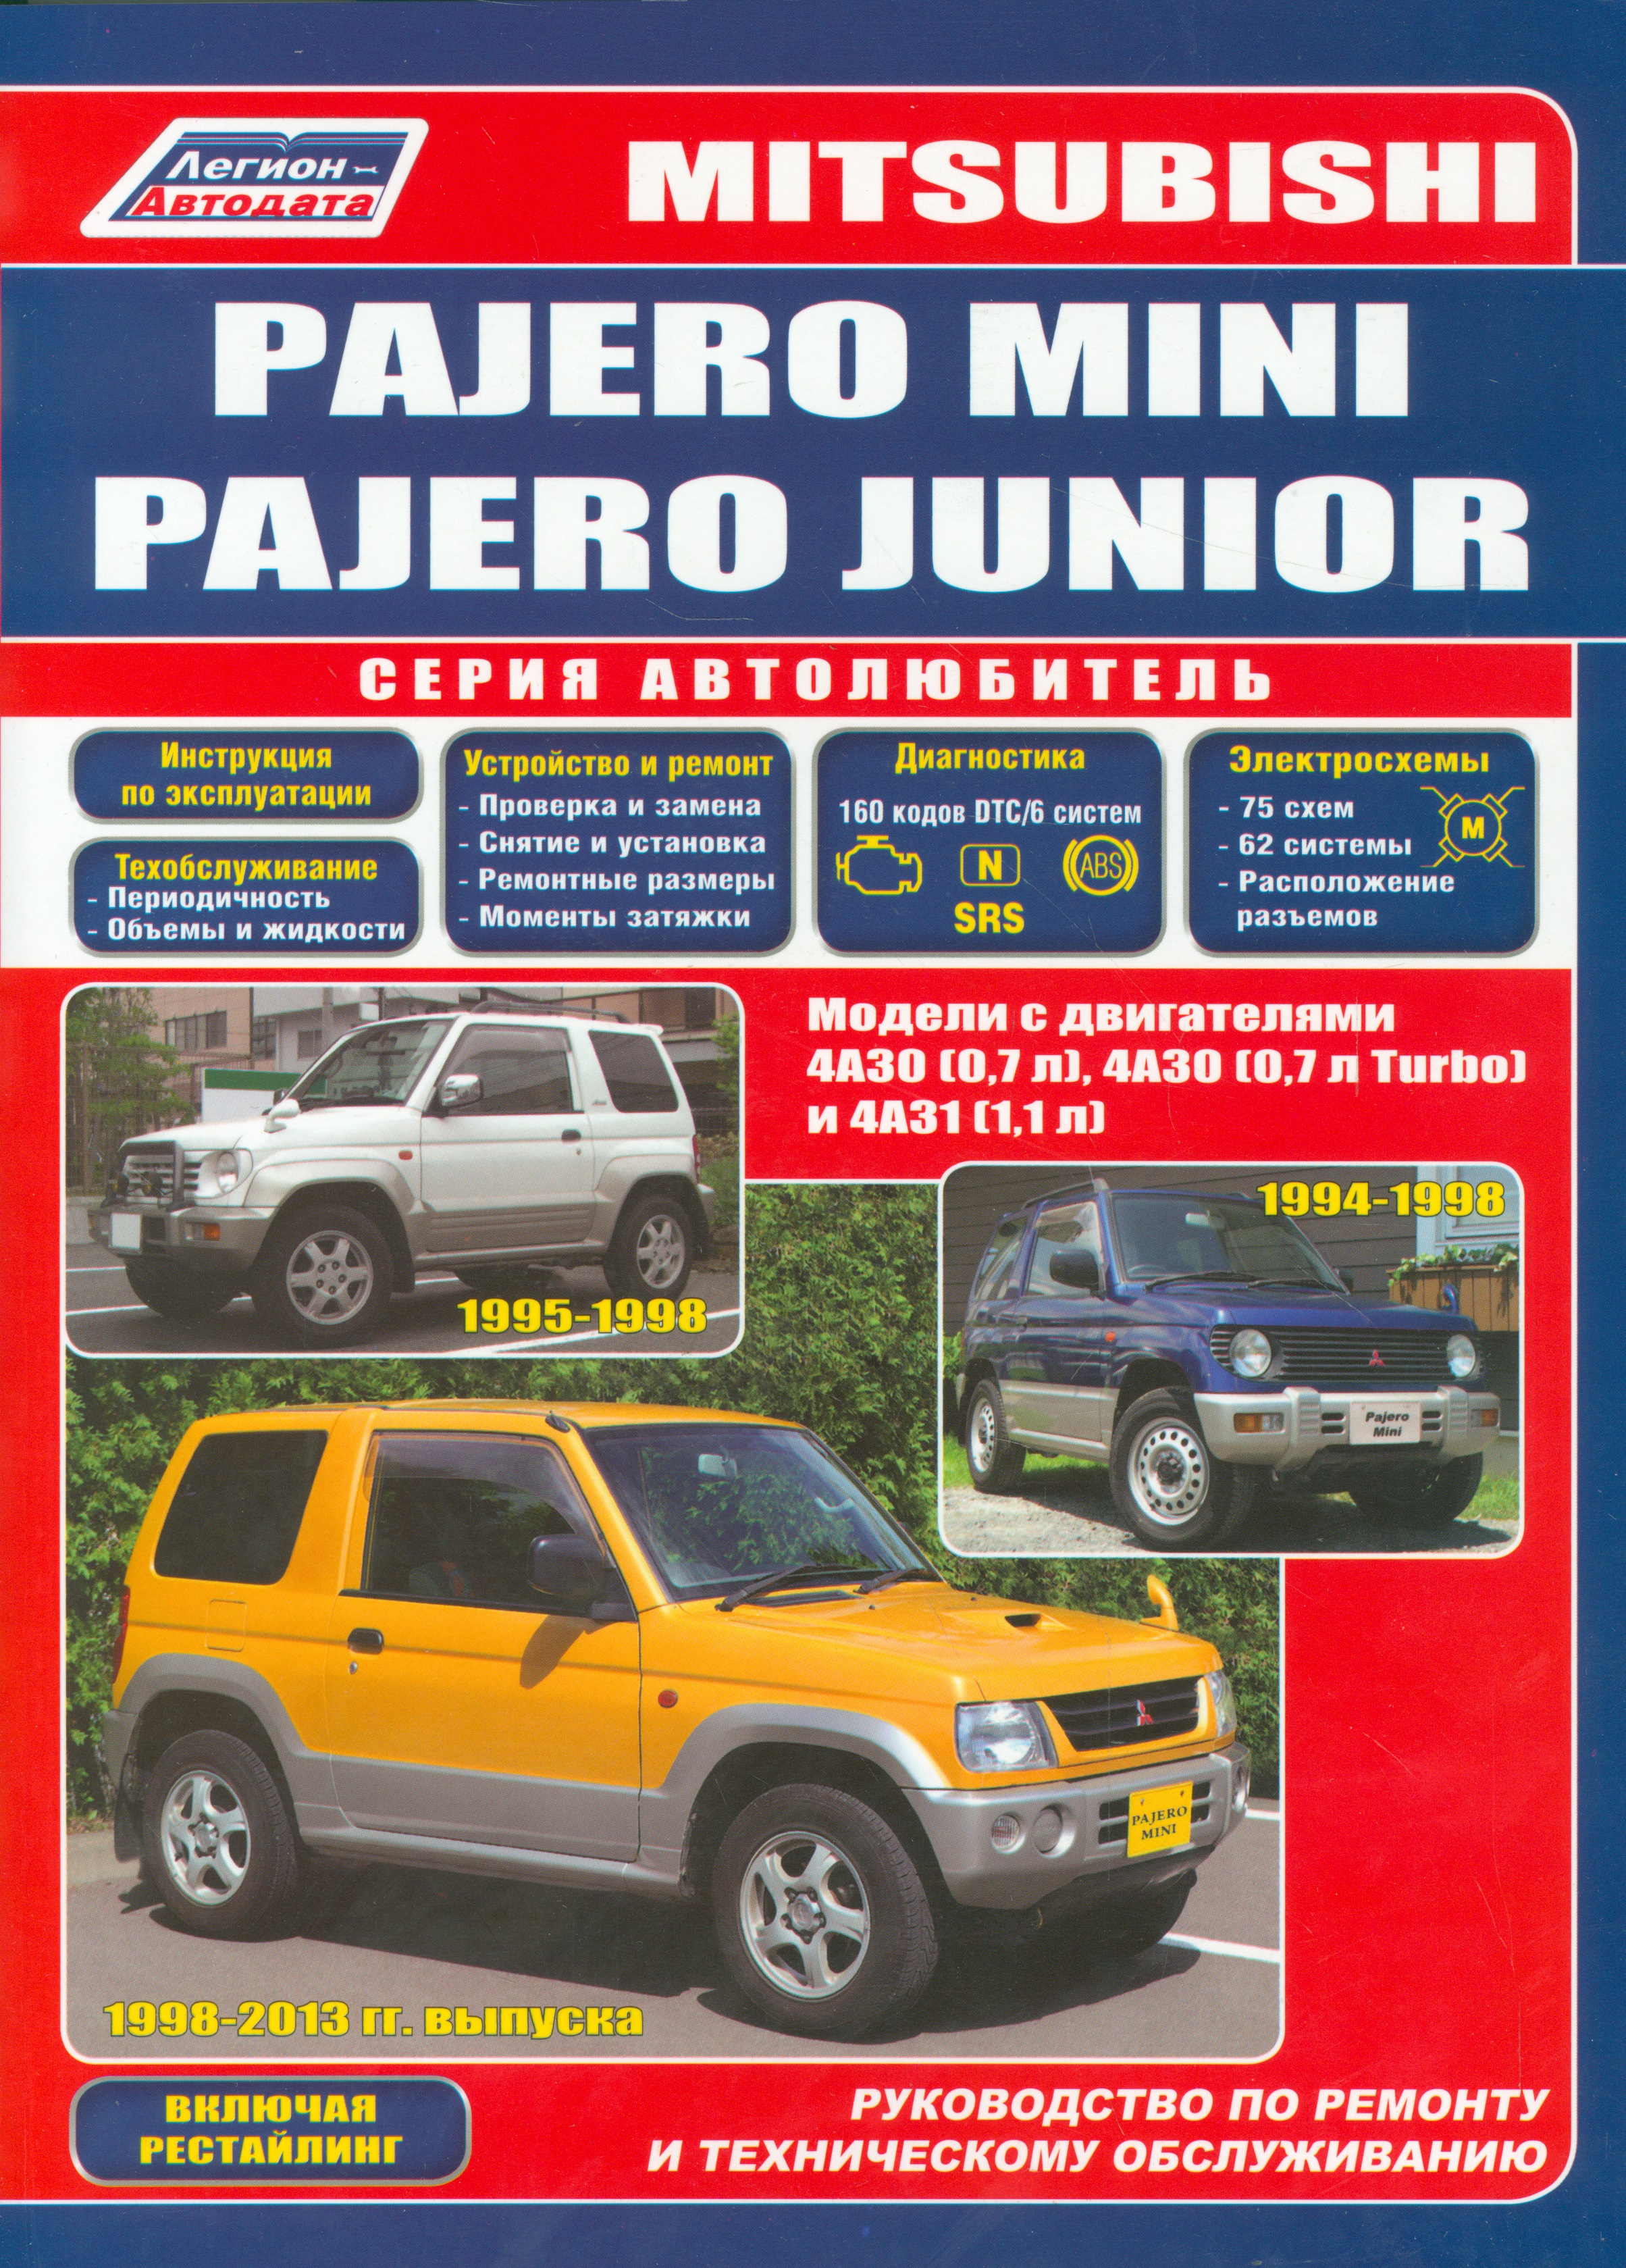 Mitsubishi Pajero Mini Pajero Junior Мод. с двигат. 4А30 (0,7 л.) 4А30… (мАвтолюбитель) mitsubishi pajero mini pajero junior модели с двигателями 4а30 0 7 л 4а30 0 7 л turbo 4a31 1 1 л руководство по ремонту и техническому обслуживанию